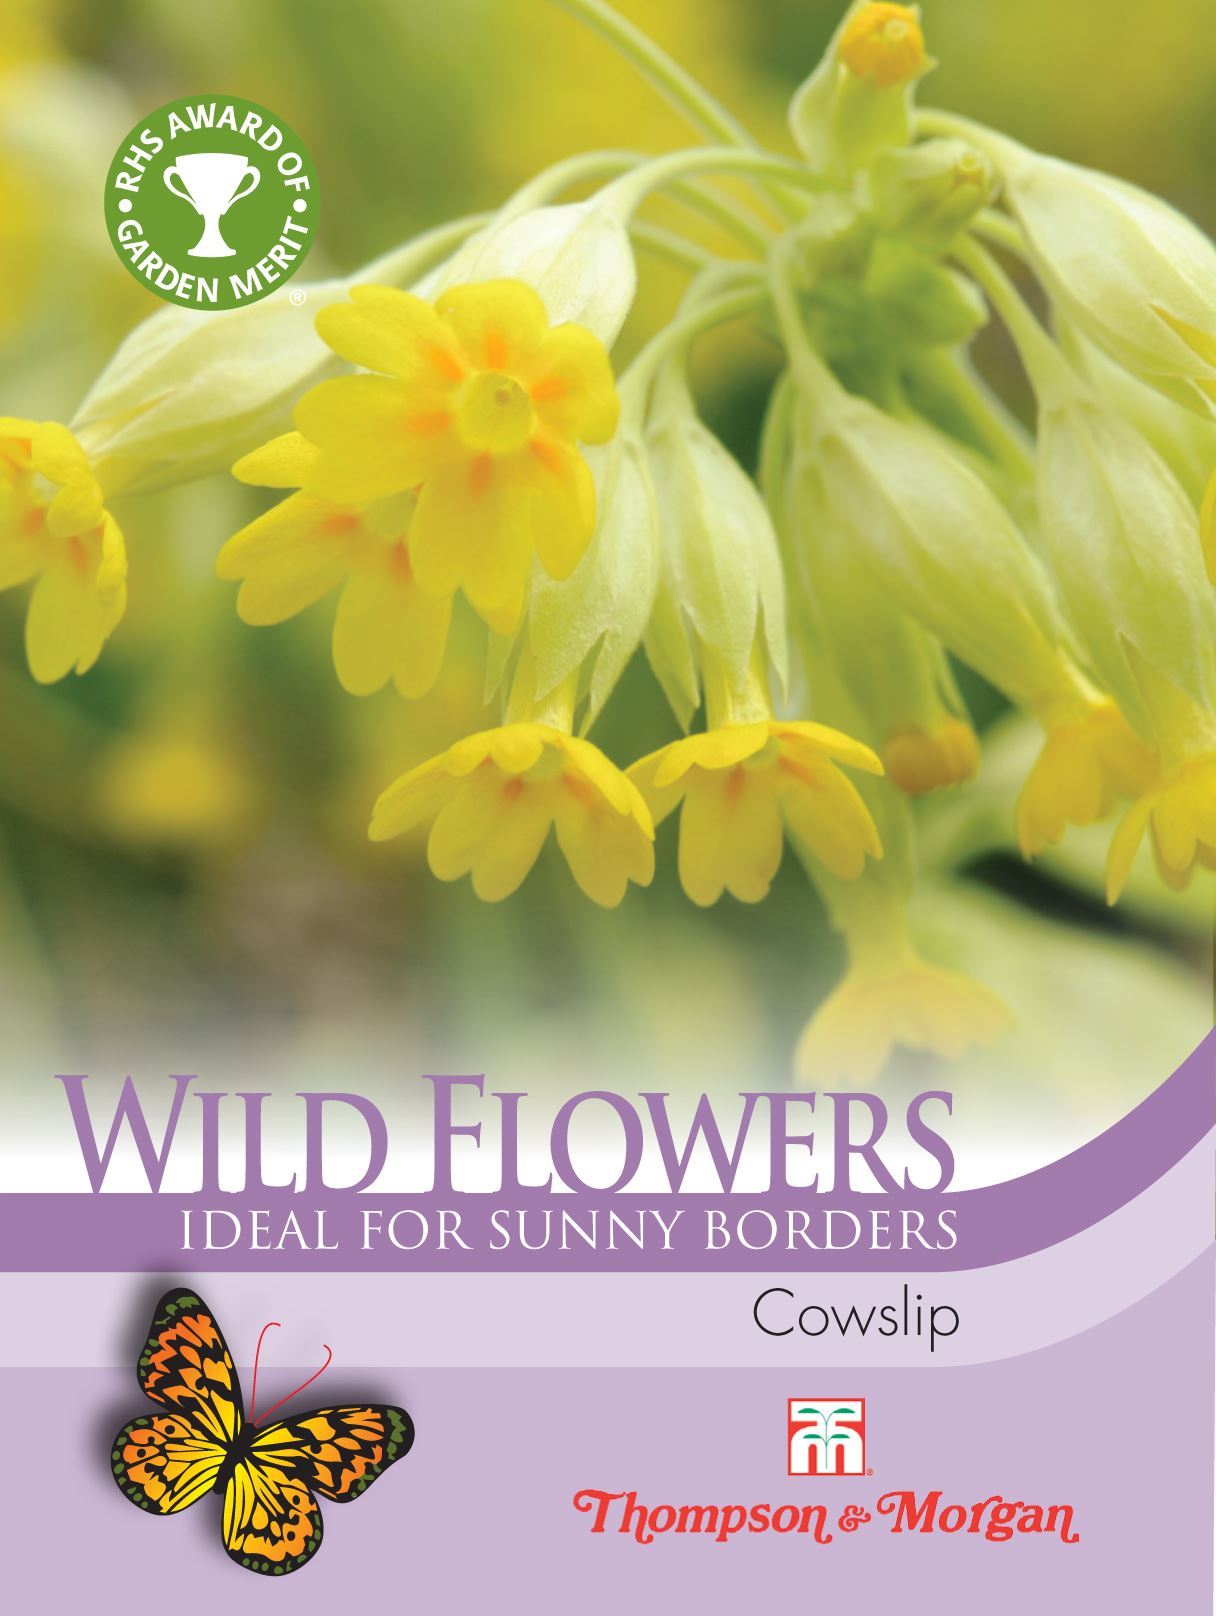 Wild Flower Cowslips (Primula veris) - The Pavilion